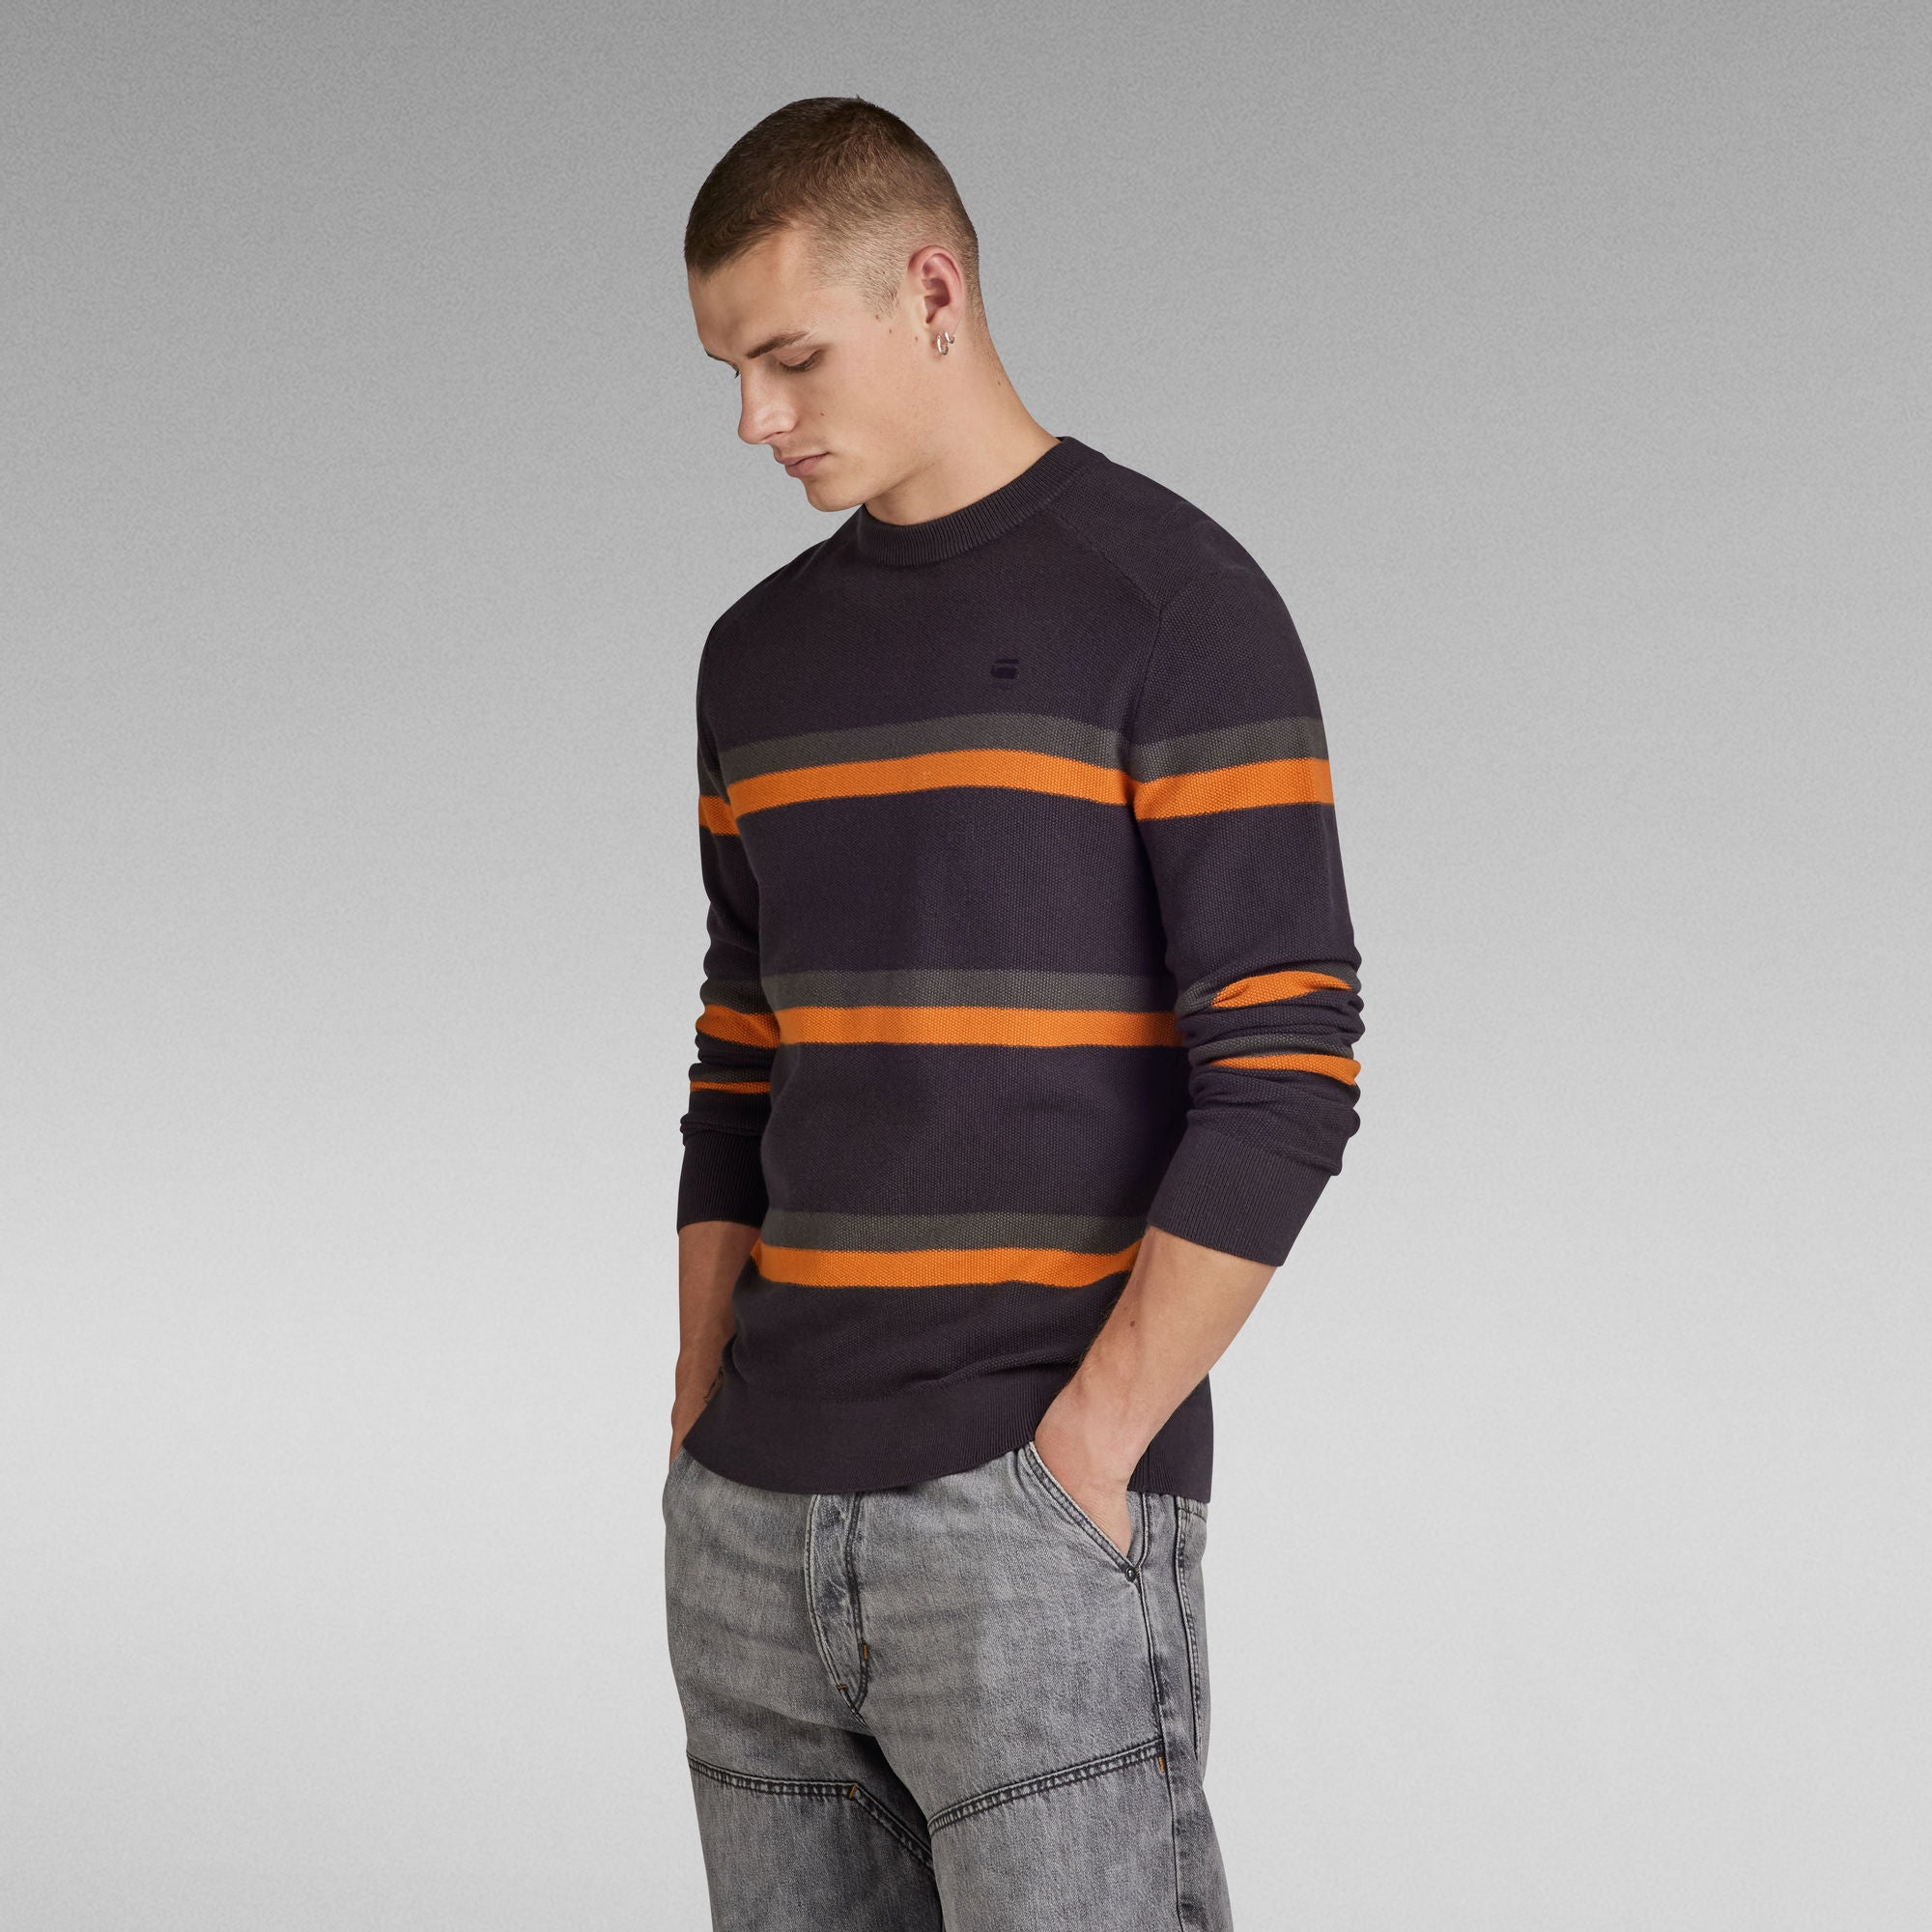 G-Star Raw - Stripe Knitted Sweater - Grey Asphalt